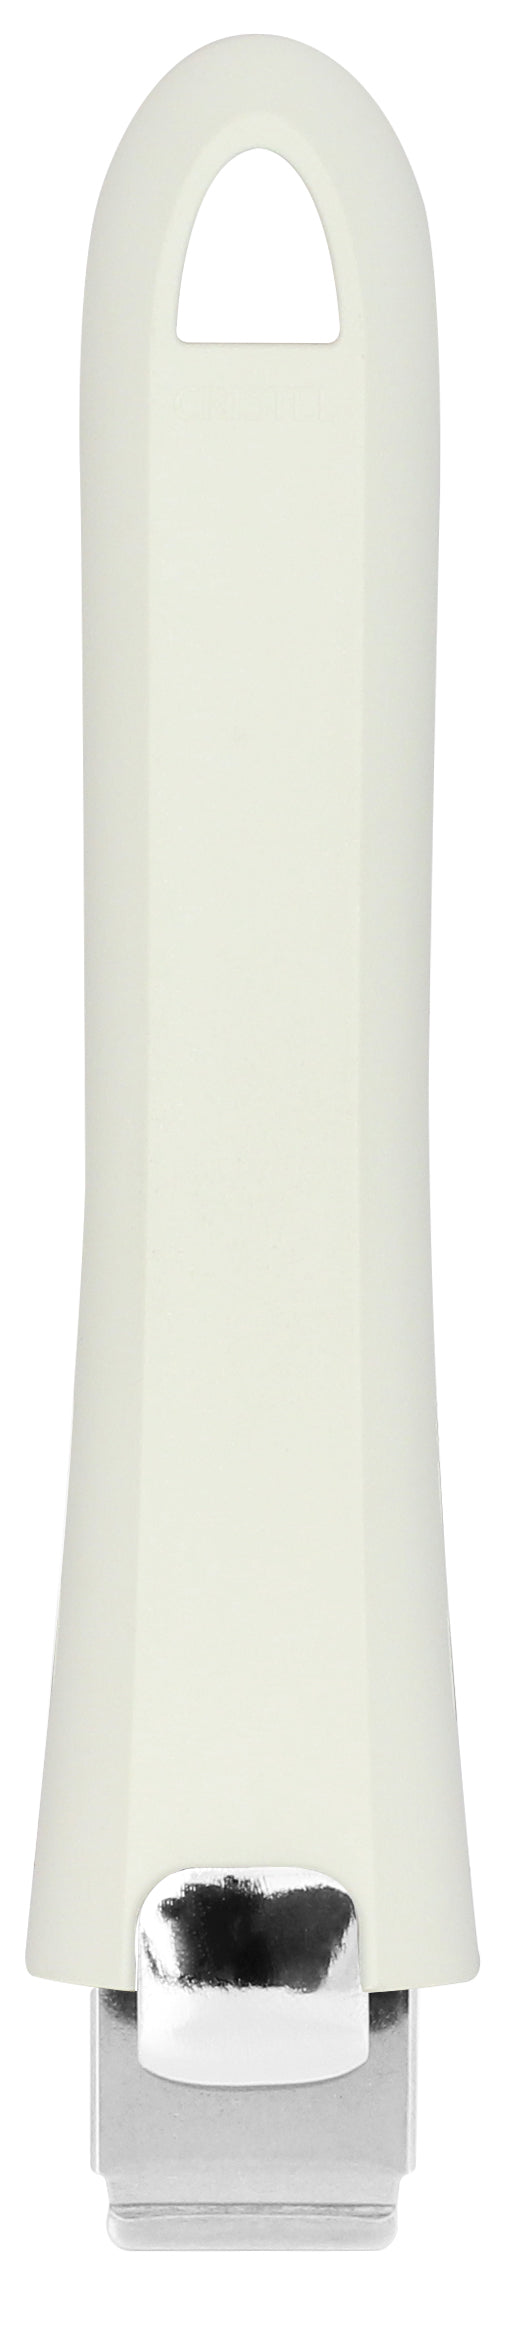 Poignée Mutine amovible blanc | CRISTEL